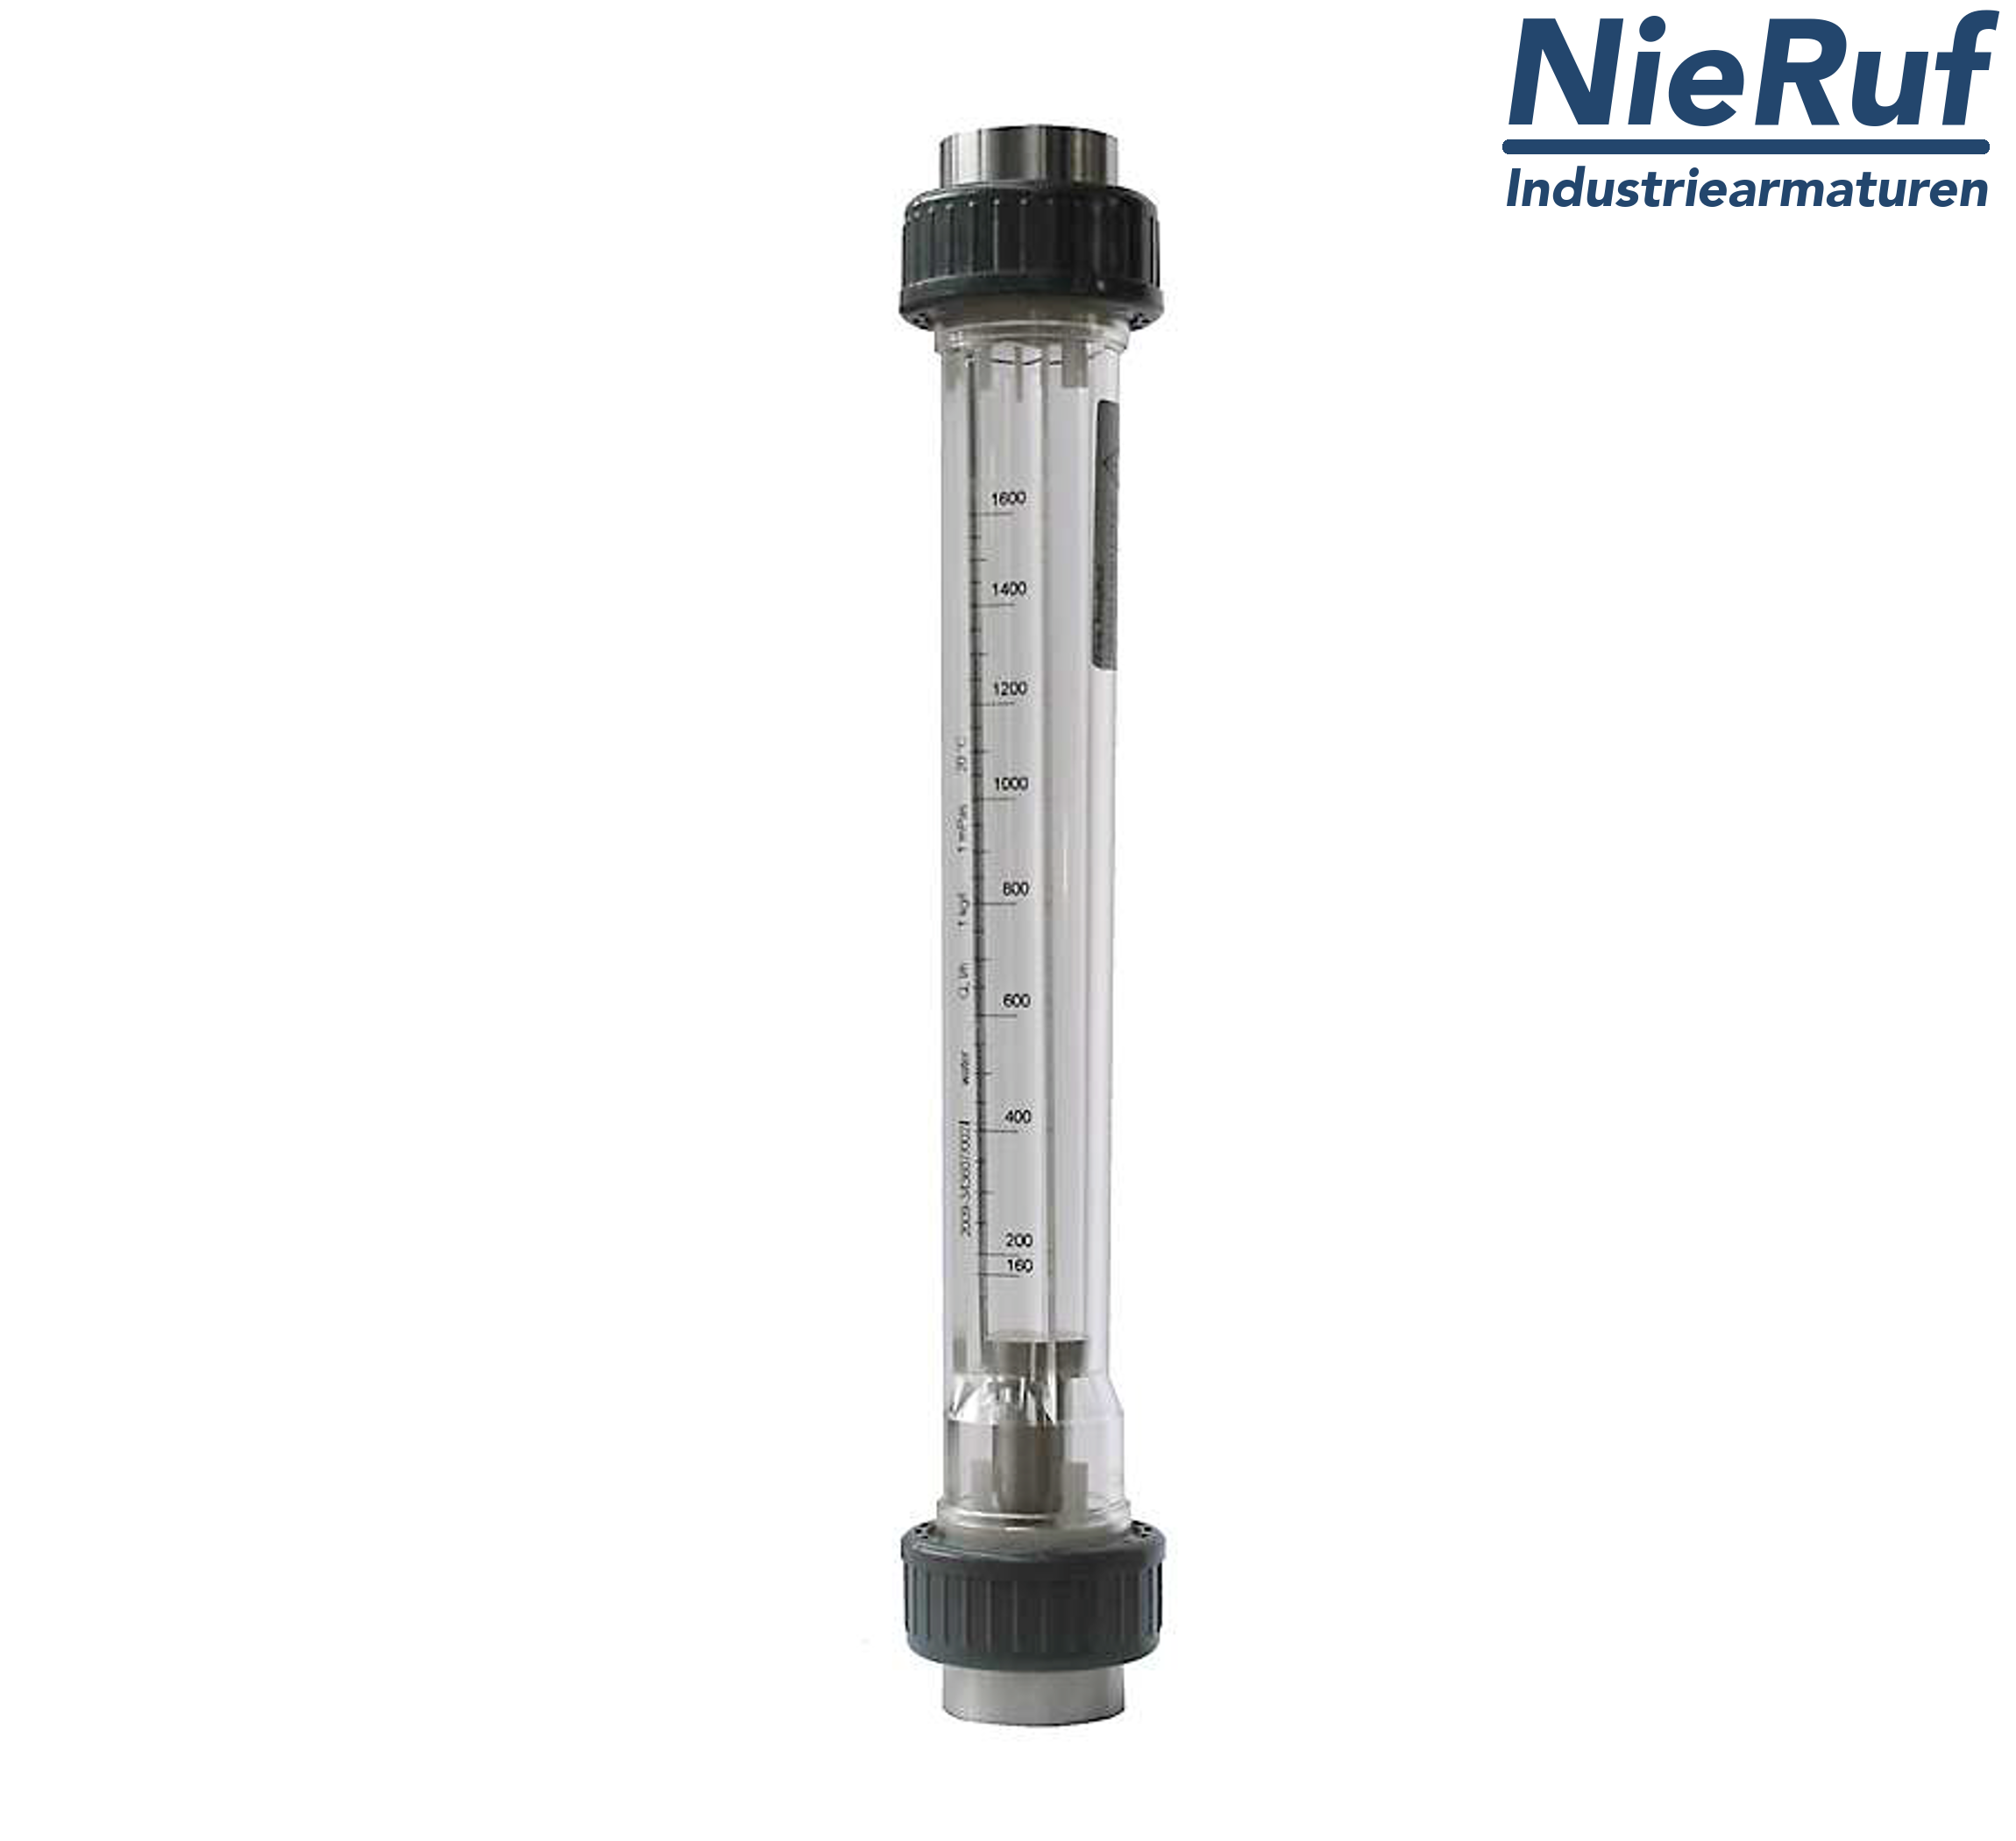 Variable area flowmeter 3/4" inch NPT 160.0 - 1600 l/h water NBR